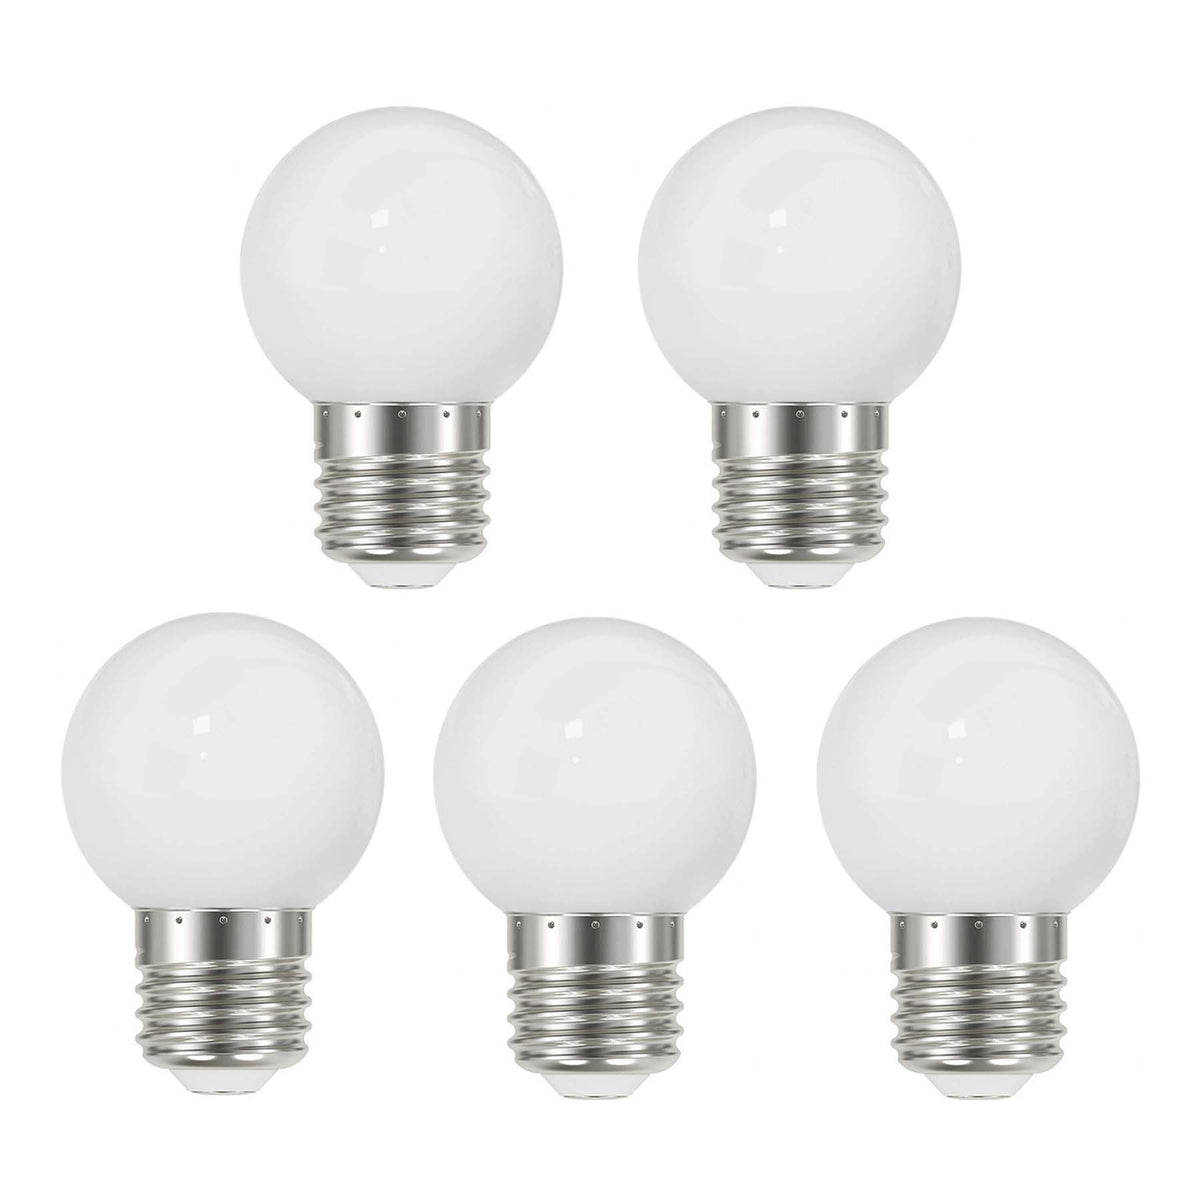 G.W.S LED Wholesale LED Bulbs 3W / Warm White (3000K) / 5 3W E27 Bayonet Festoon LED Coloured Bulb Warm White